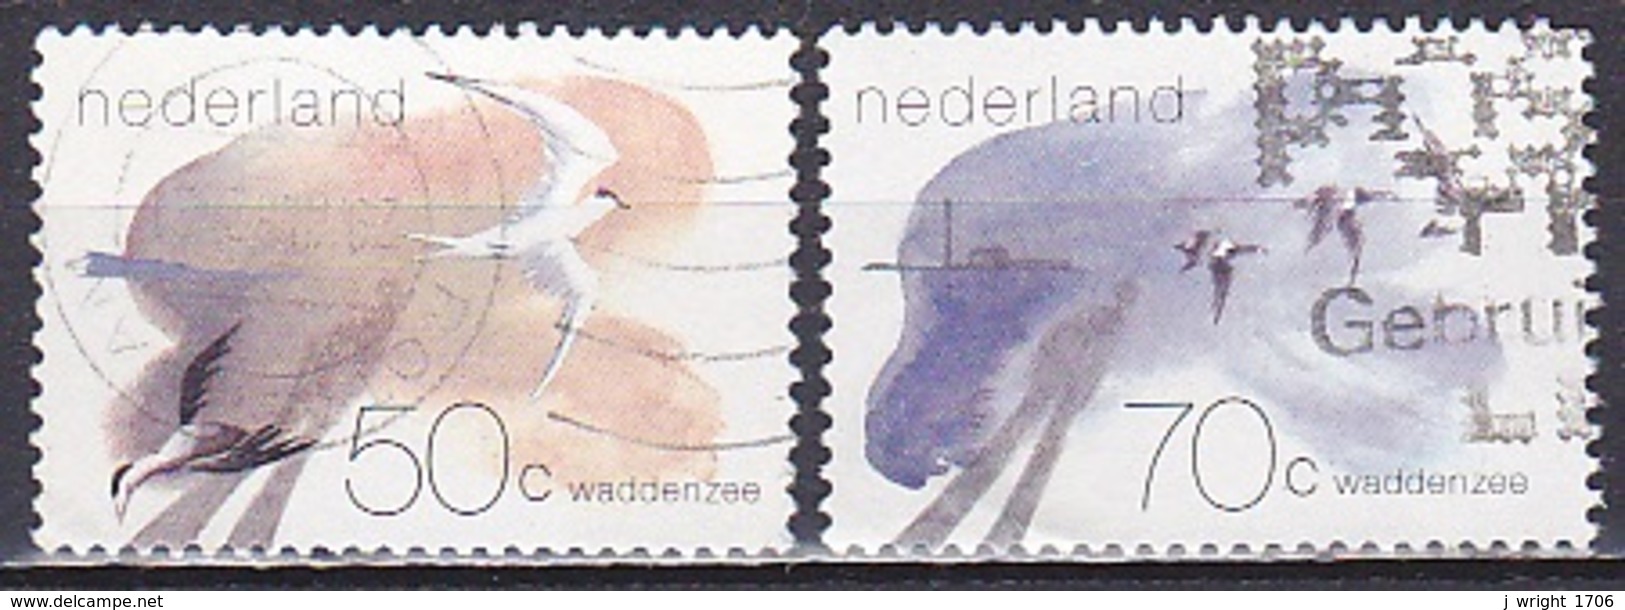 Netherlands/1982 - Waddenzee/Waddengebied - Set - USED - Used Stamps